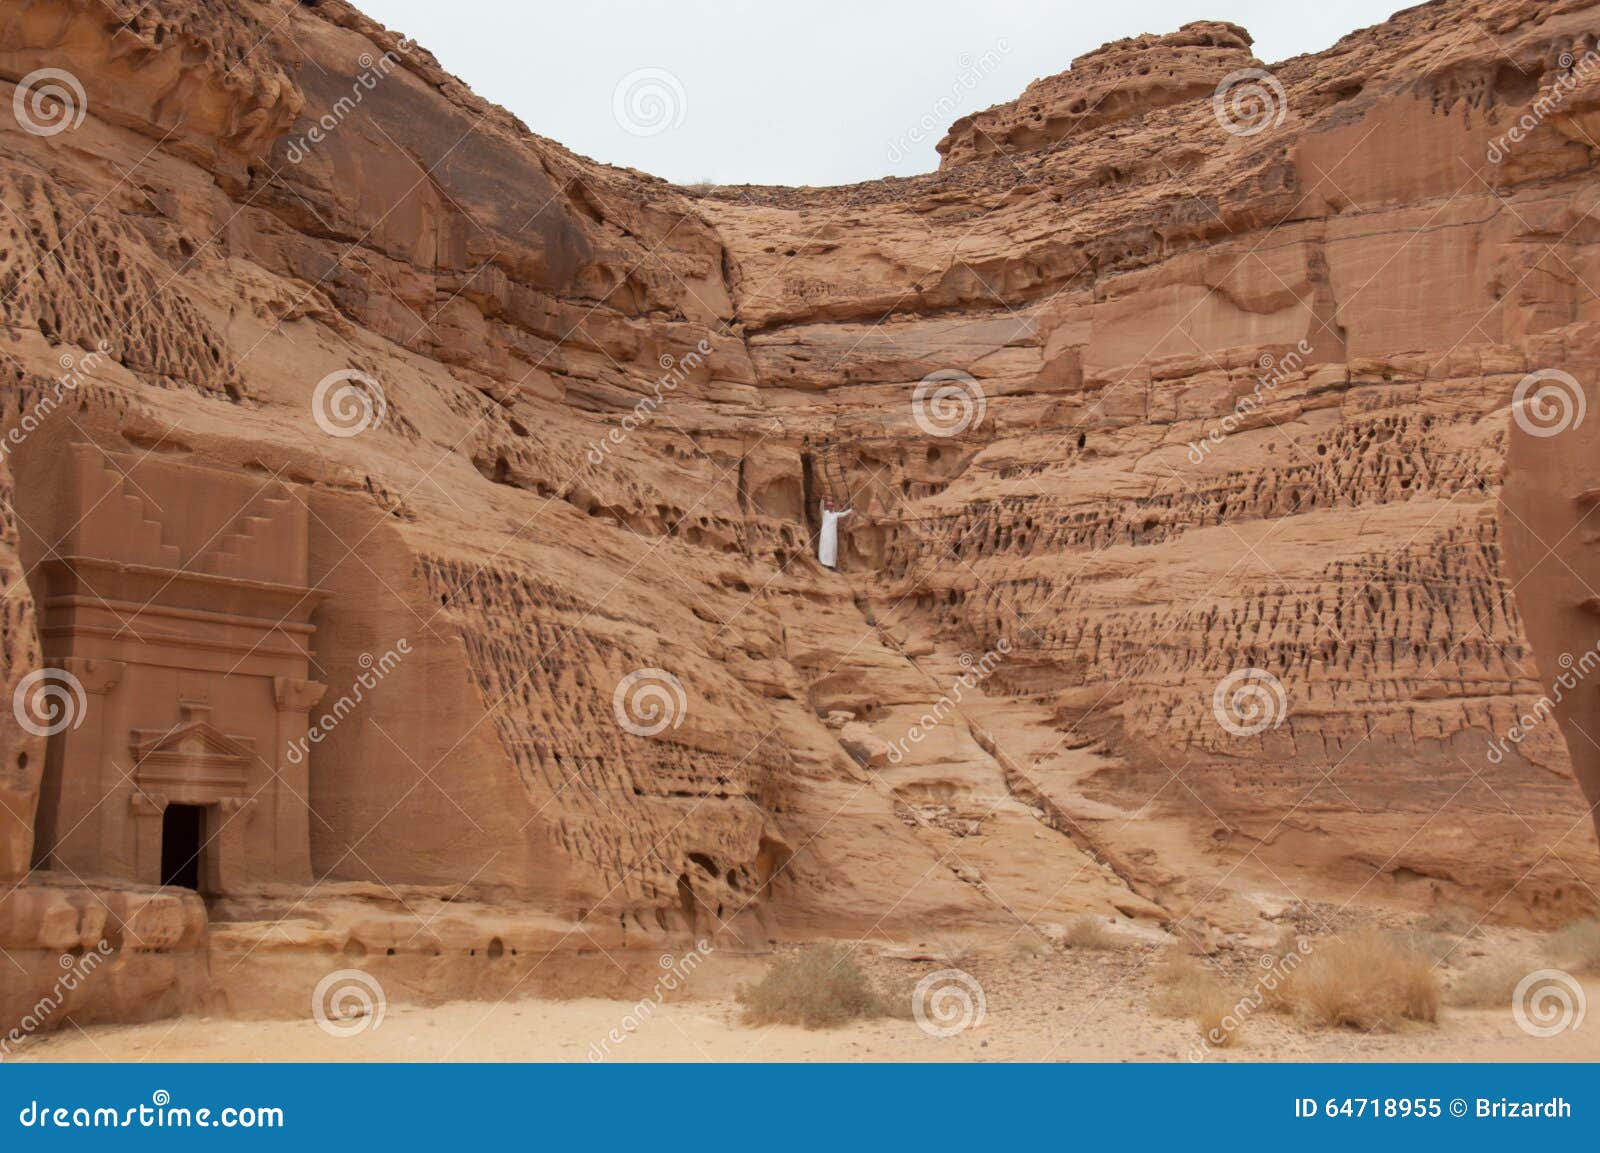 nabatean tombs in madain saleh archeological site, saudi arabia